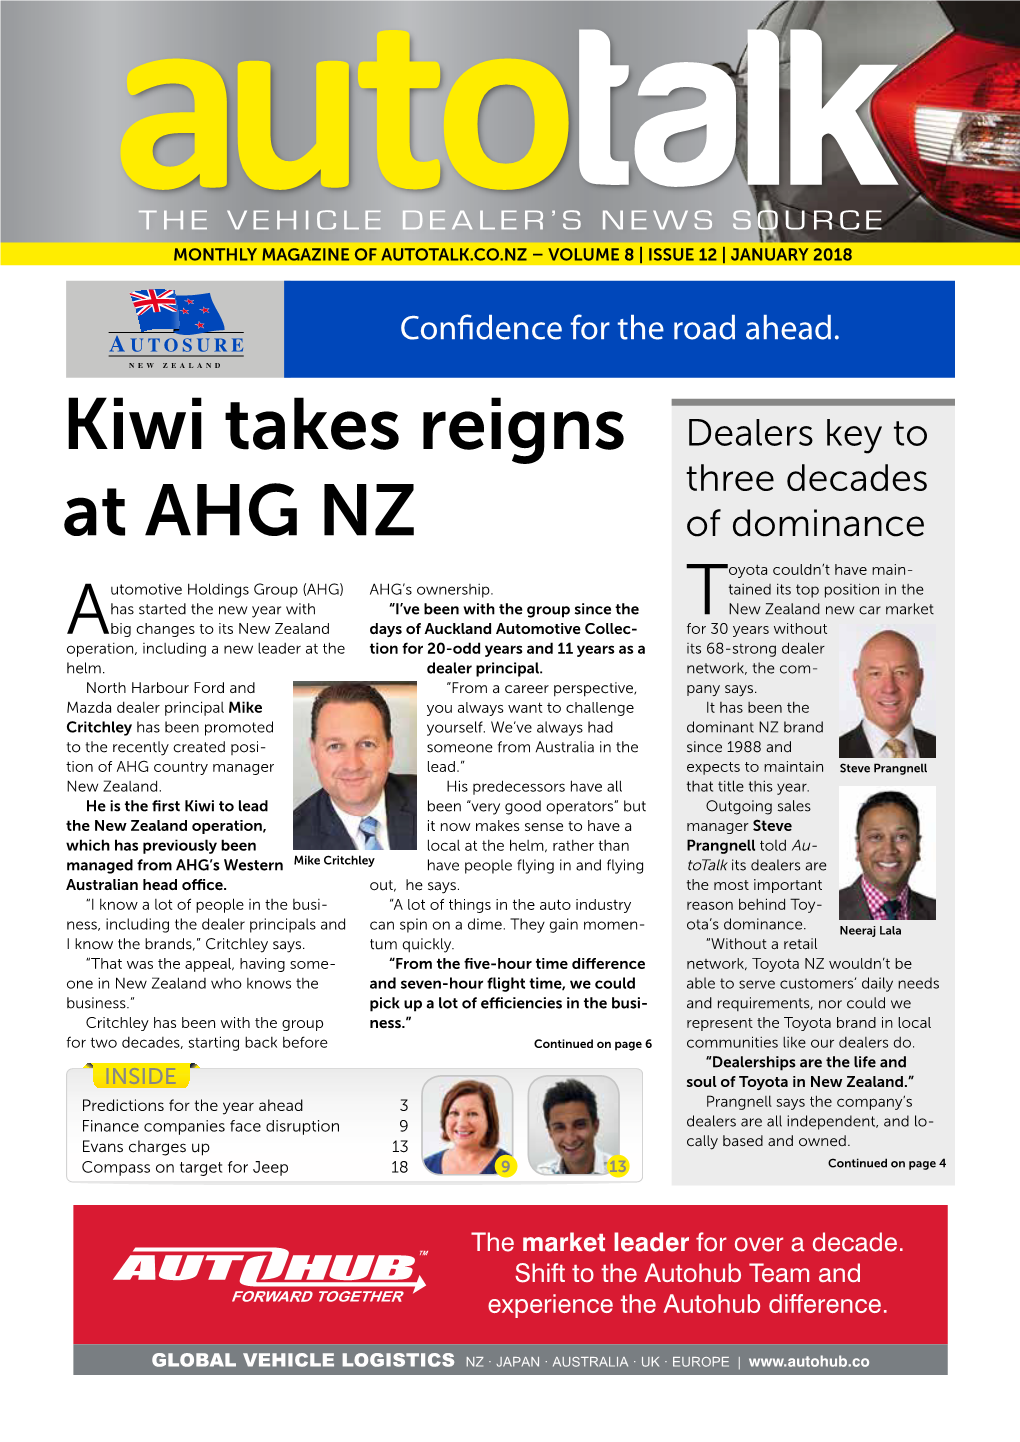 Kiwi Takes Reigns at AHG NZ